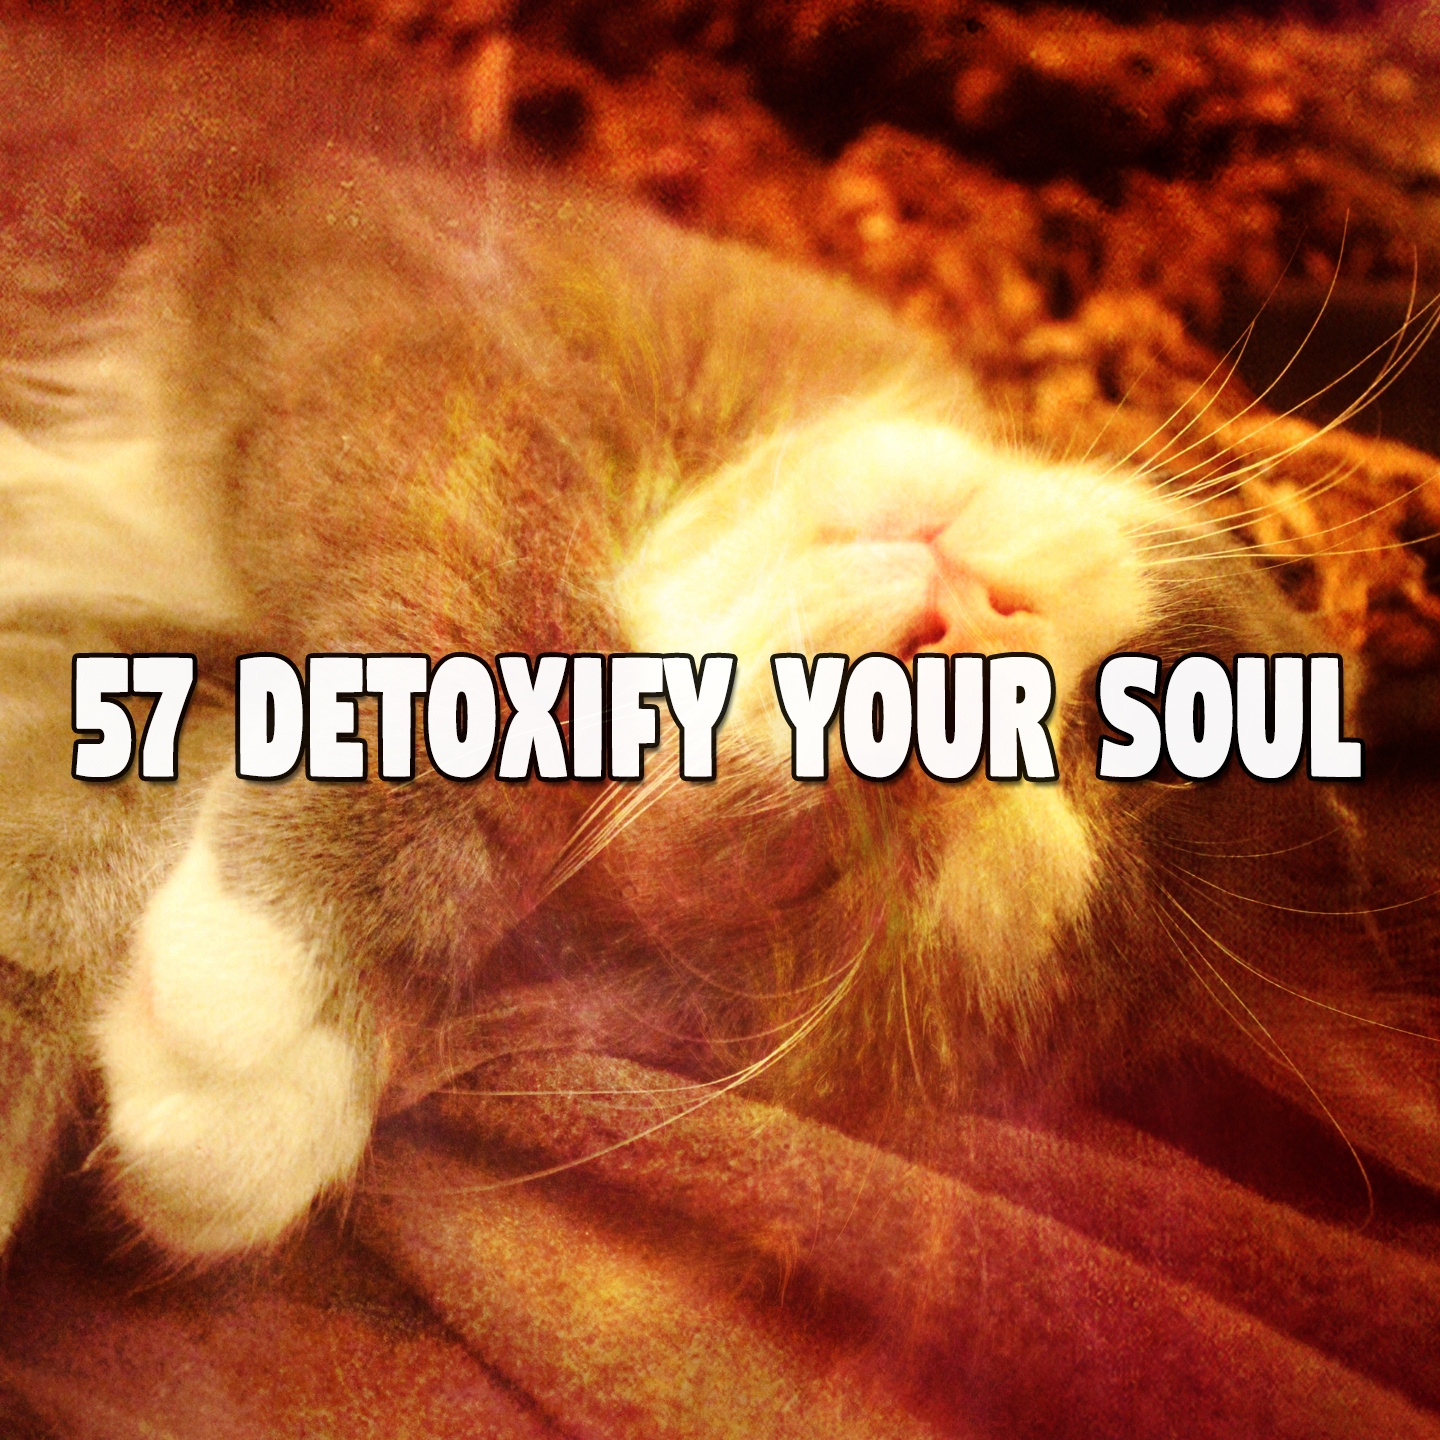 57 Detoxify Your Soul